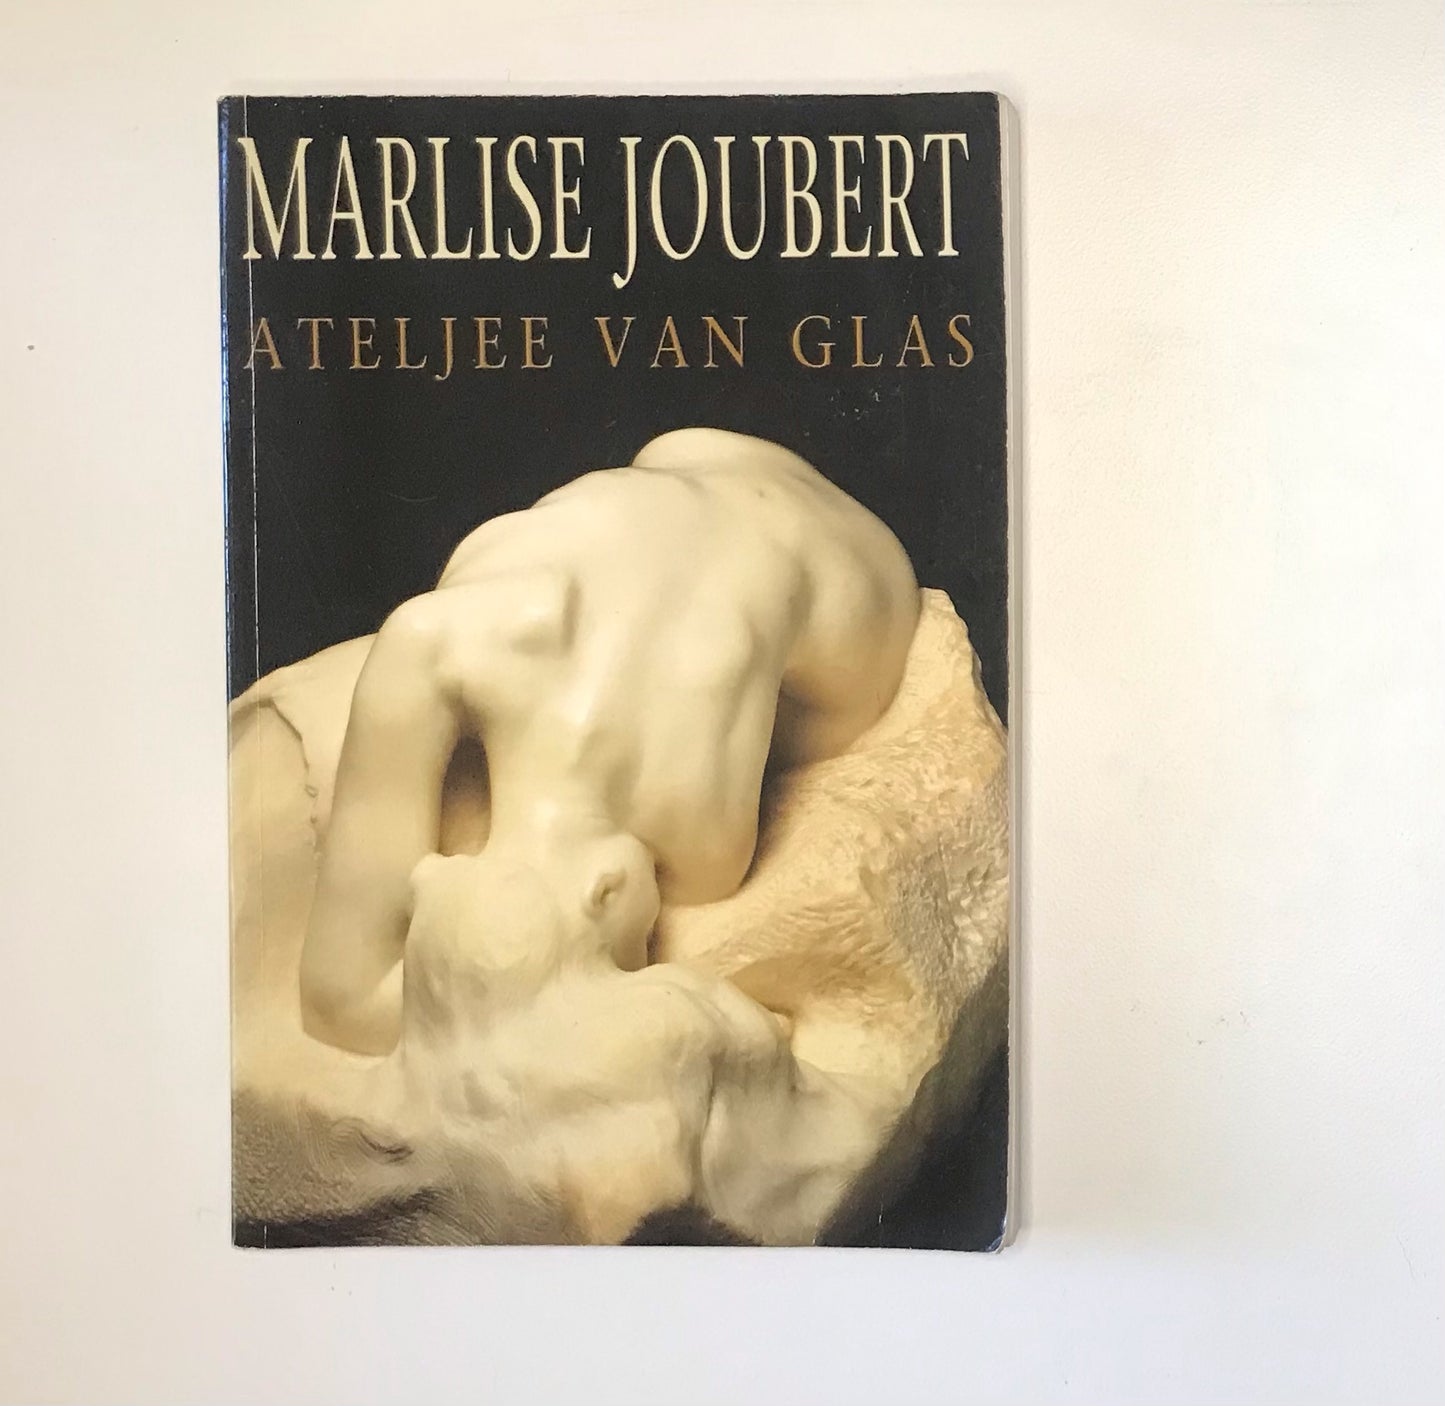 Ateljee van glas - Marlise Joubert